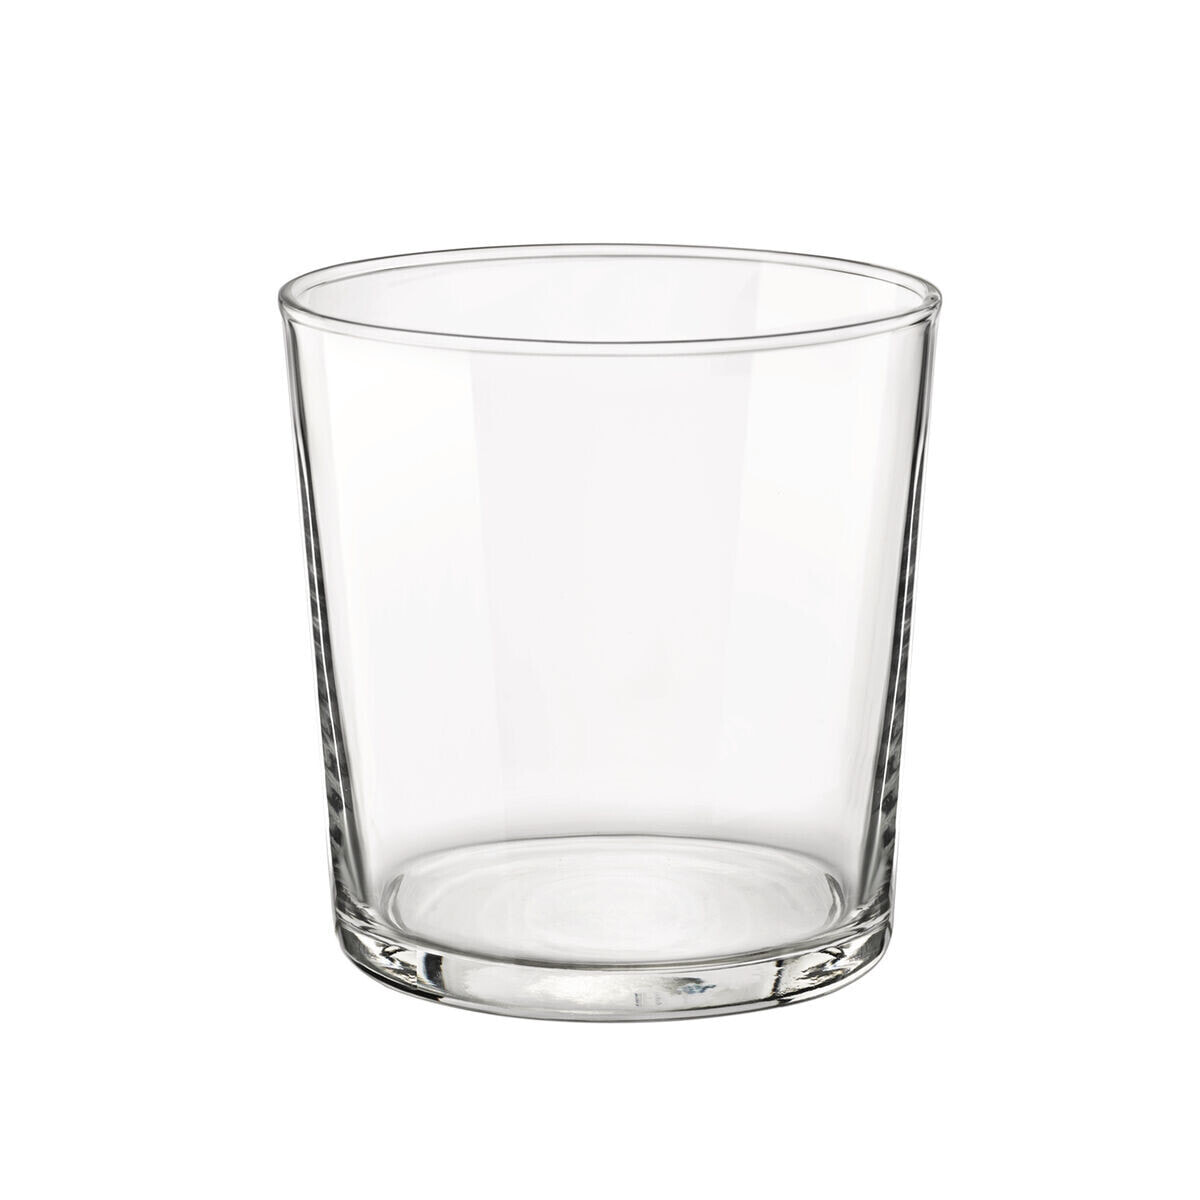 Set of glasses Bormioli Rocco Bodega Transparent 12 Units Glass 370 ml